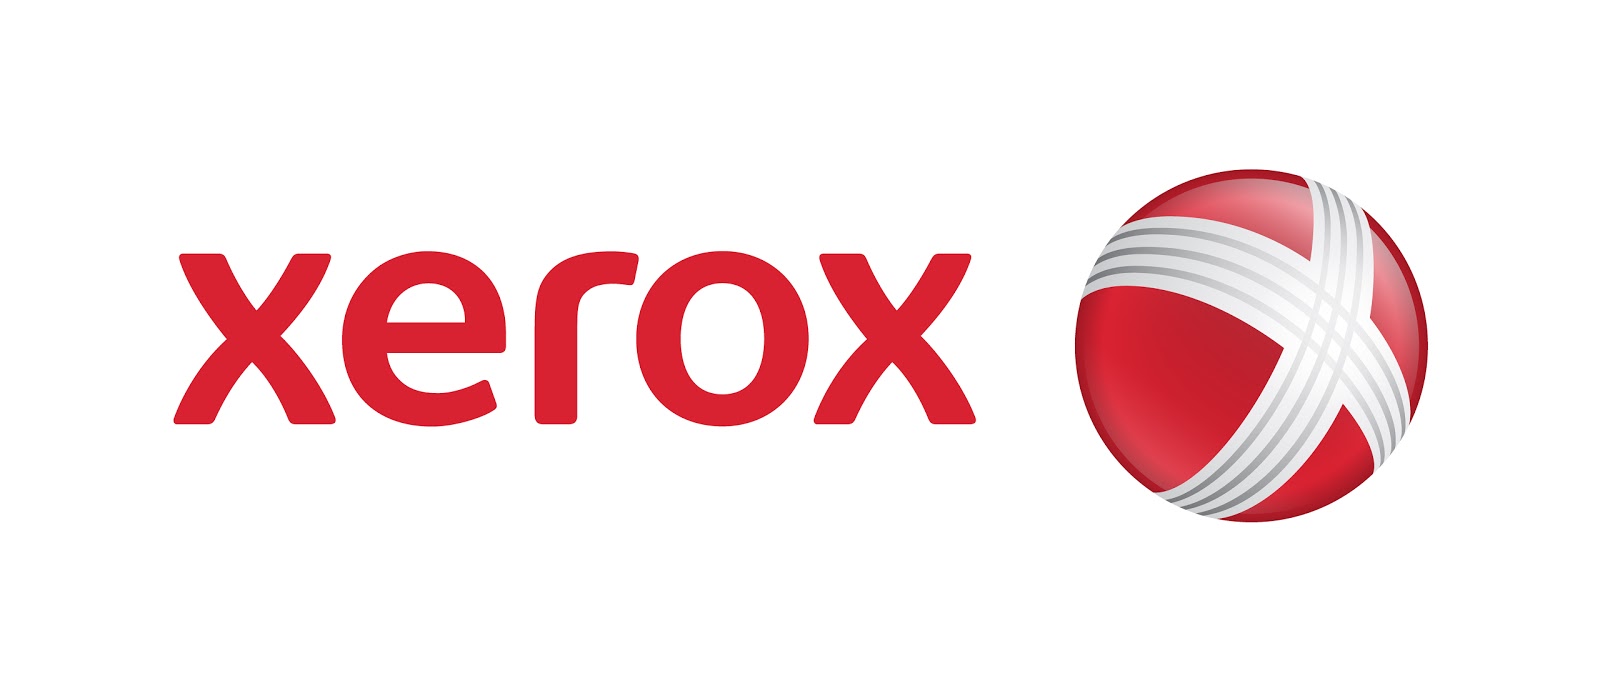 Xarox Logo photo - 1